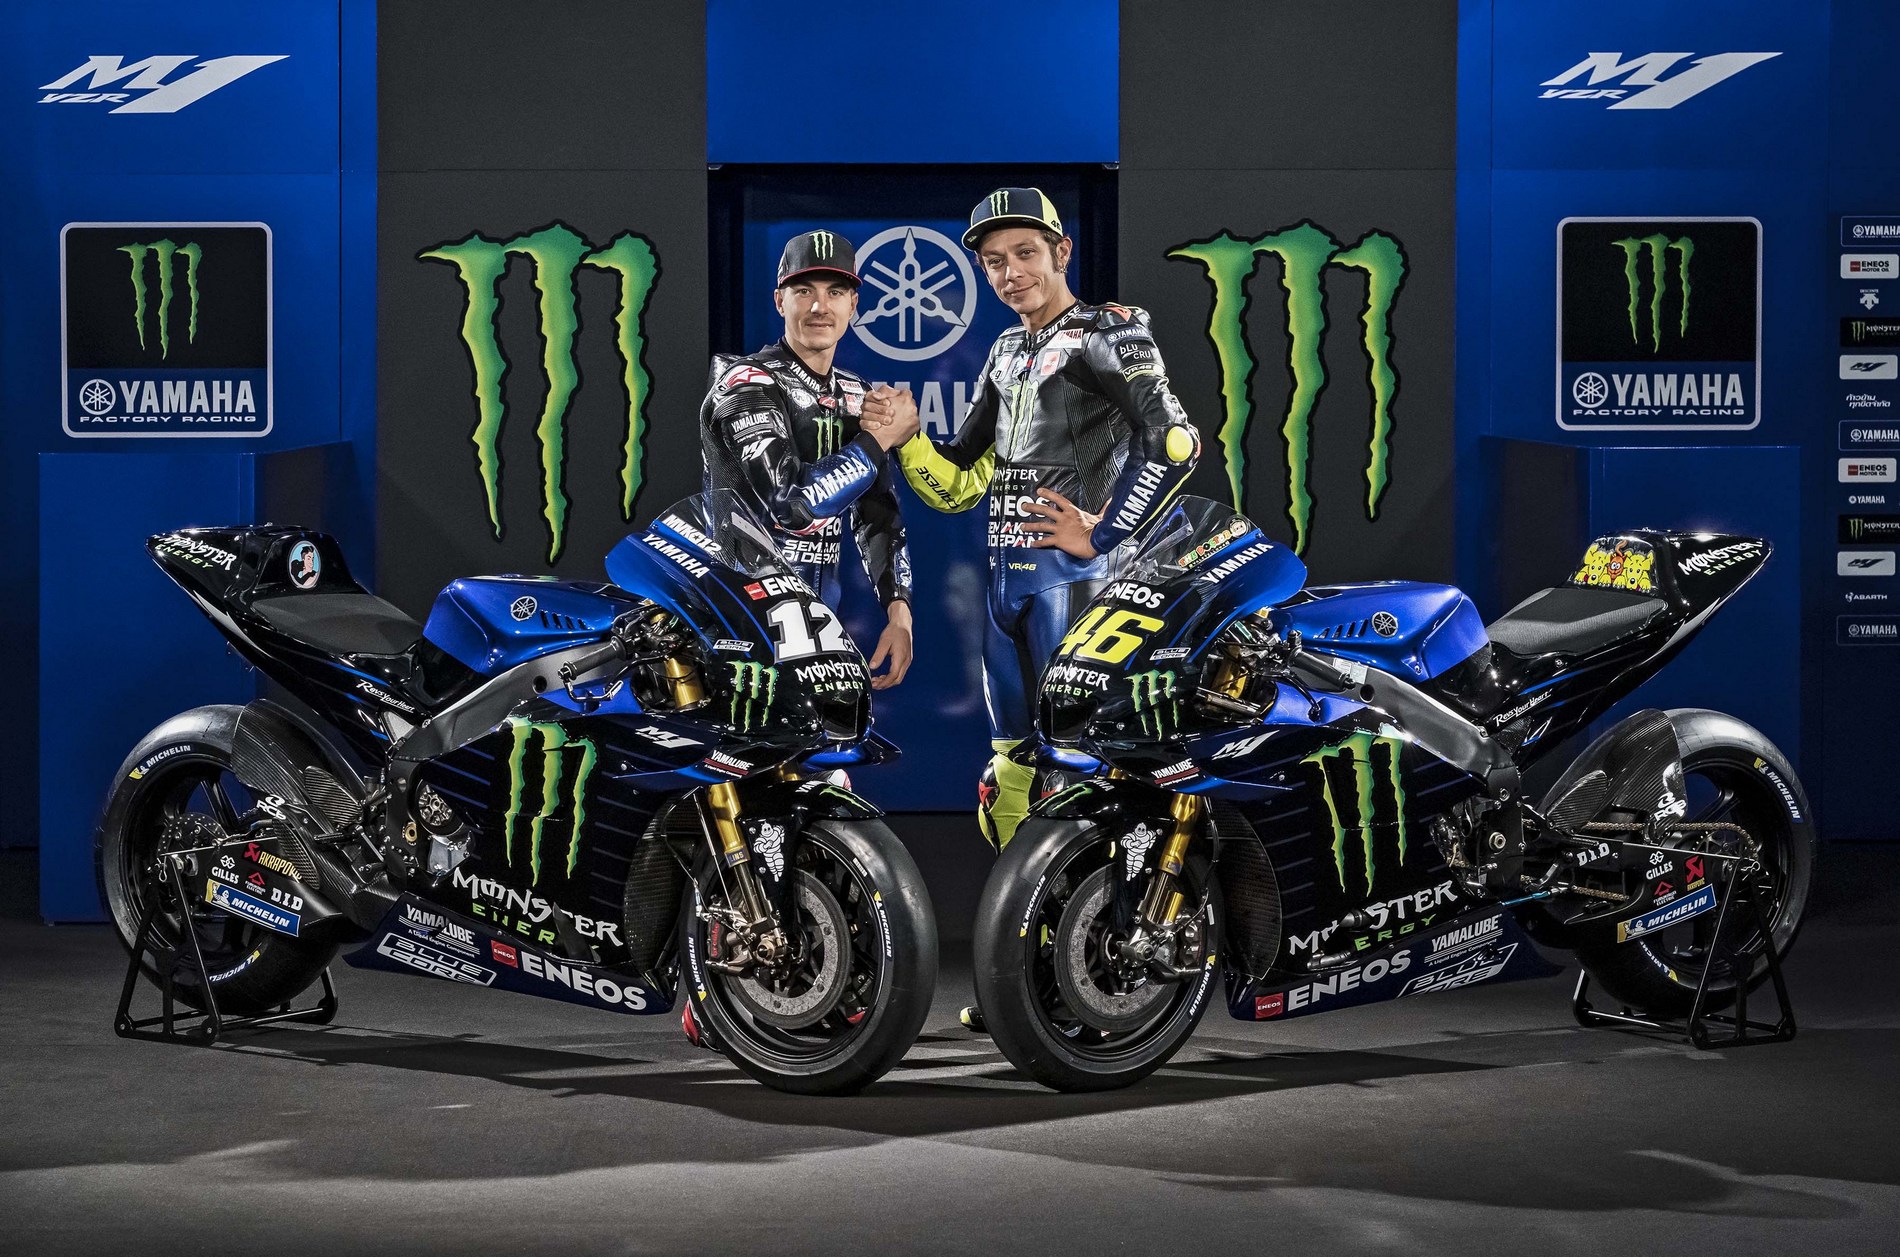 2019-Monster-Yamaha-MotoGP-Valentino-Rossi-Maverick-Vinales-10.jpg